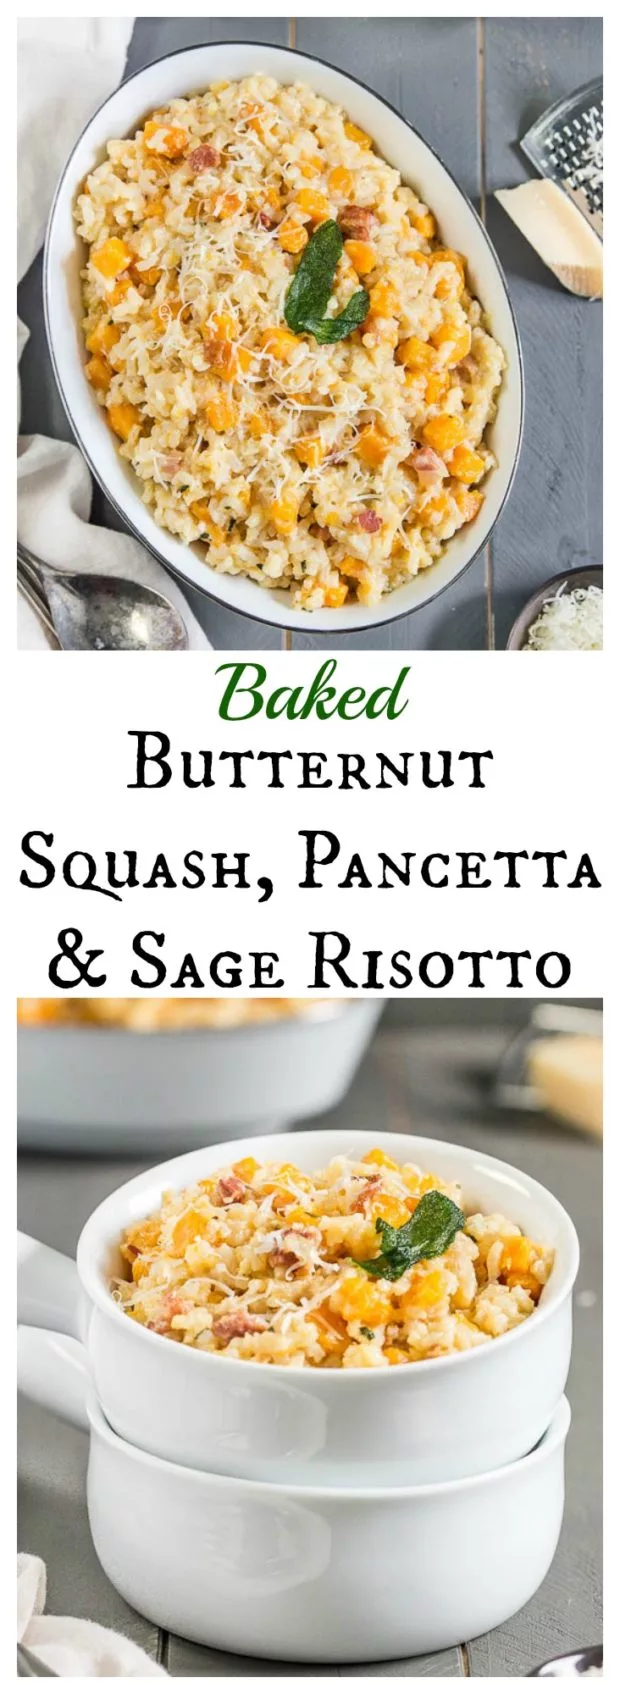 Baked Butternut Squash, Pancetta & Sage Risotto